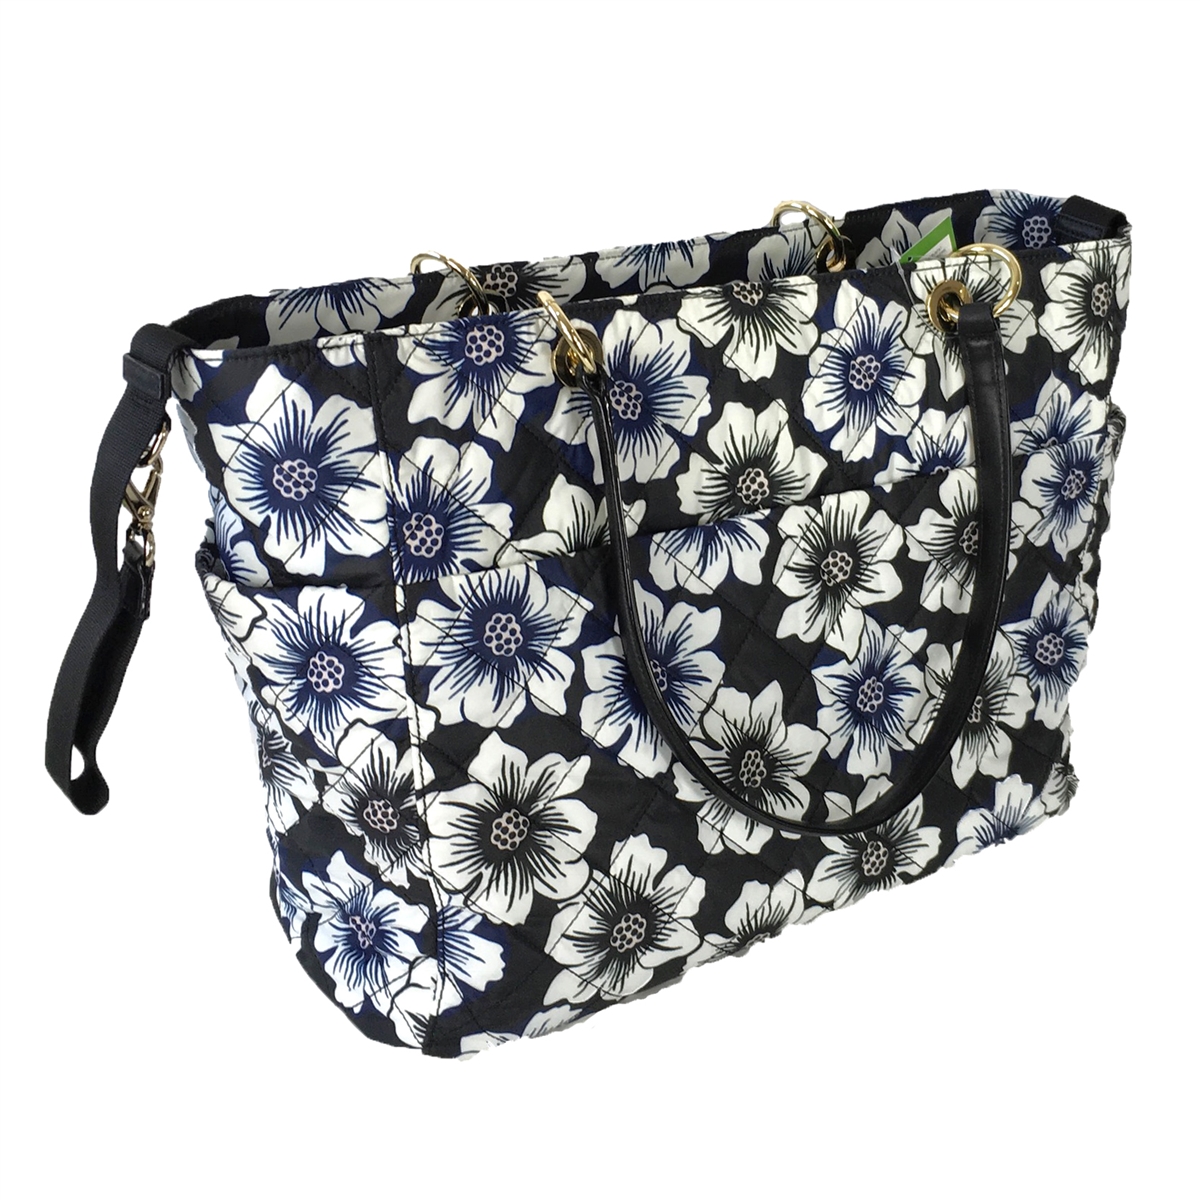 Kate Spade Adaira Baby Bag (Laurel Way Printed Blury Floral)